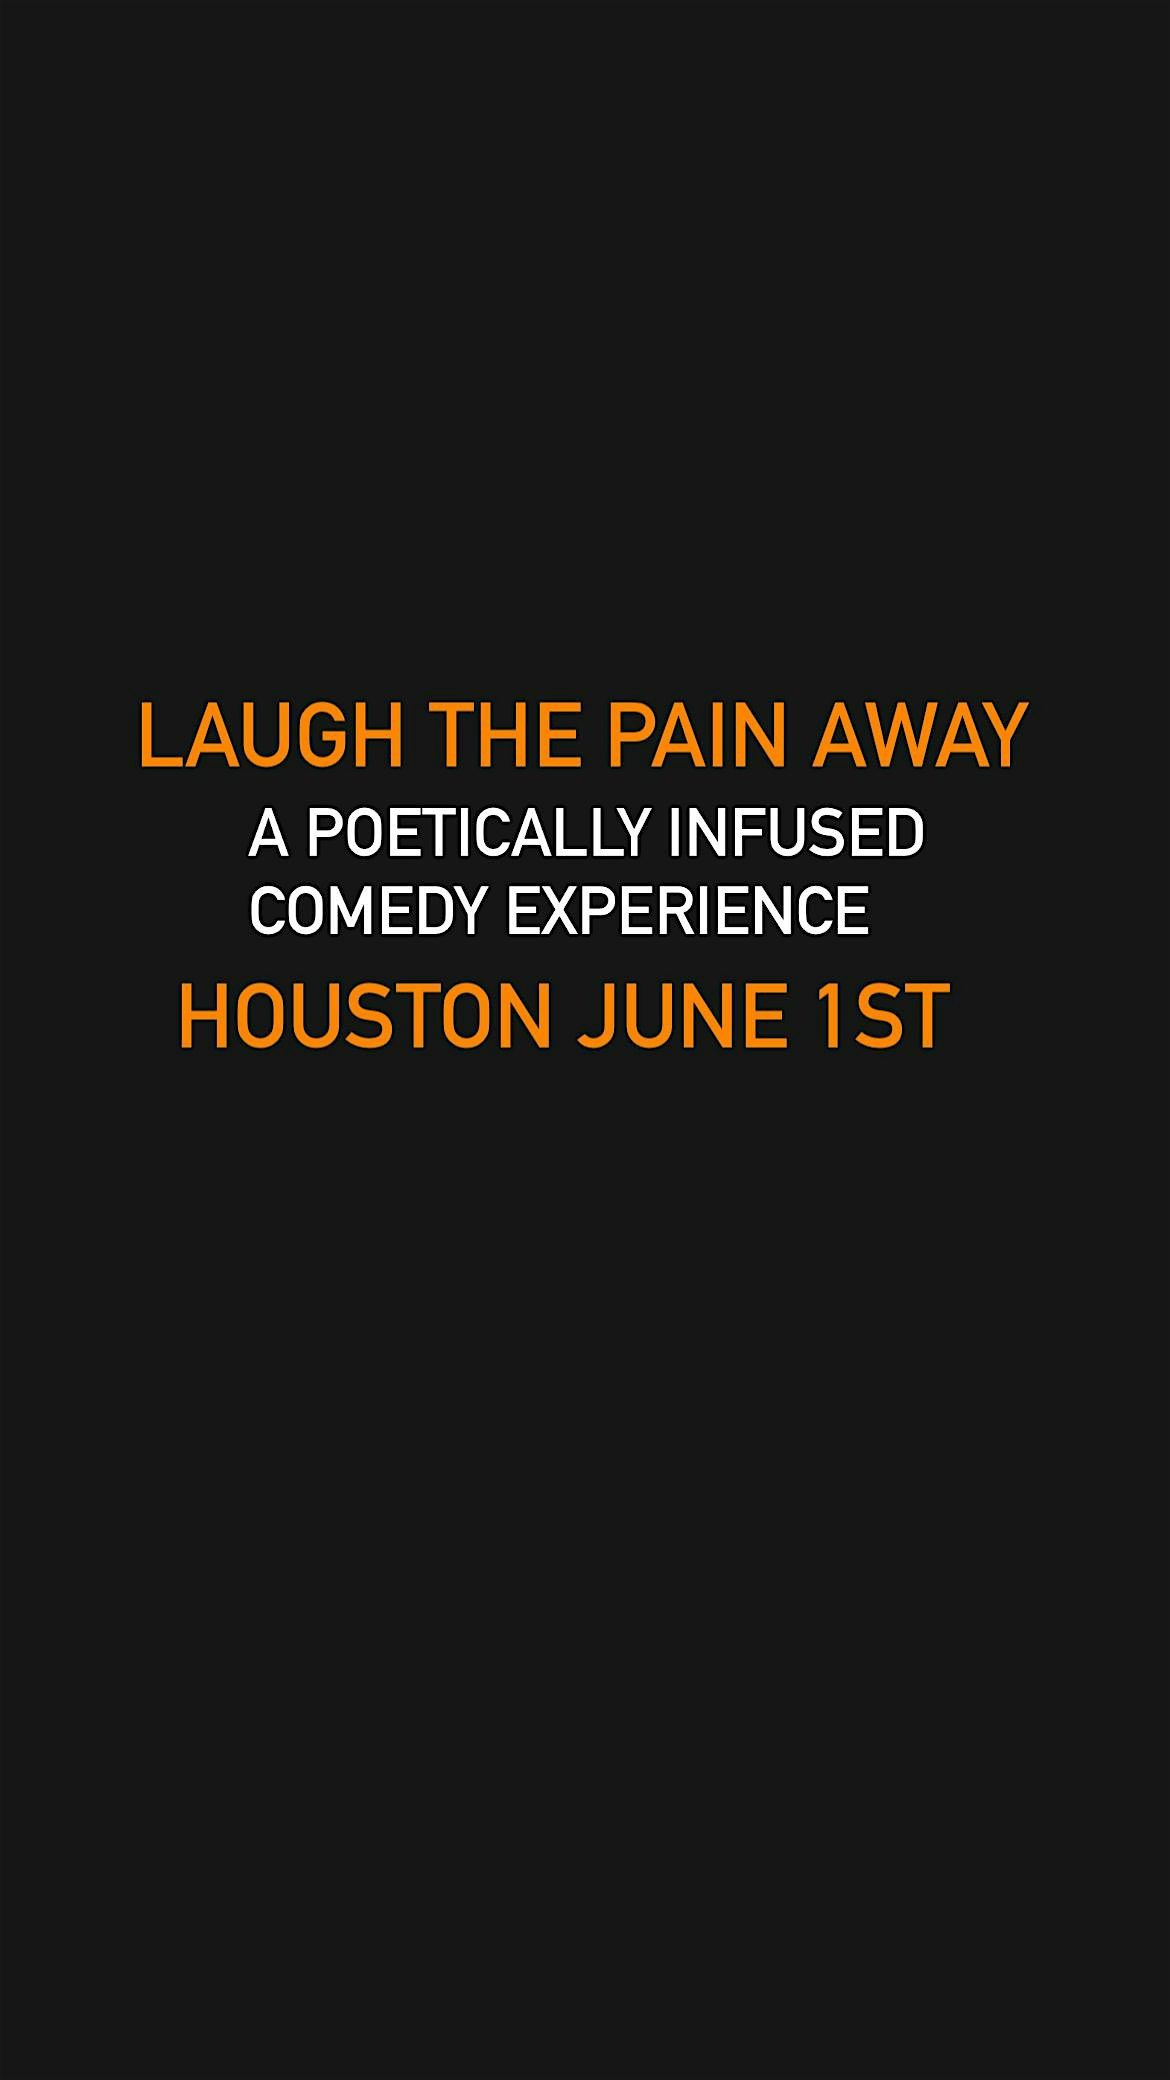 LAUGH THE PAIN AWAY HOUSTON!!